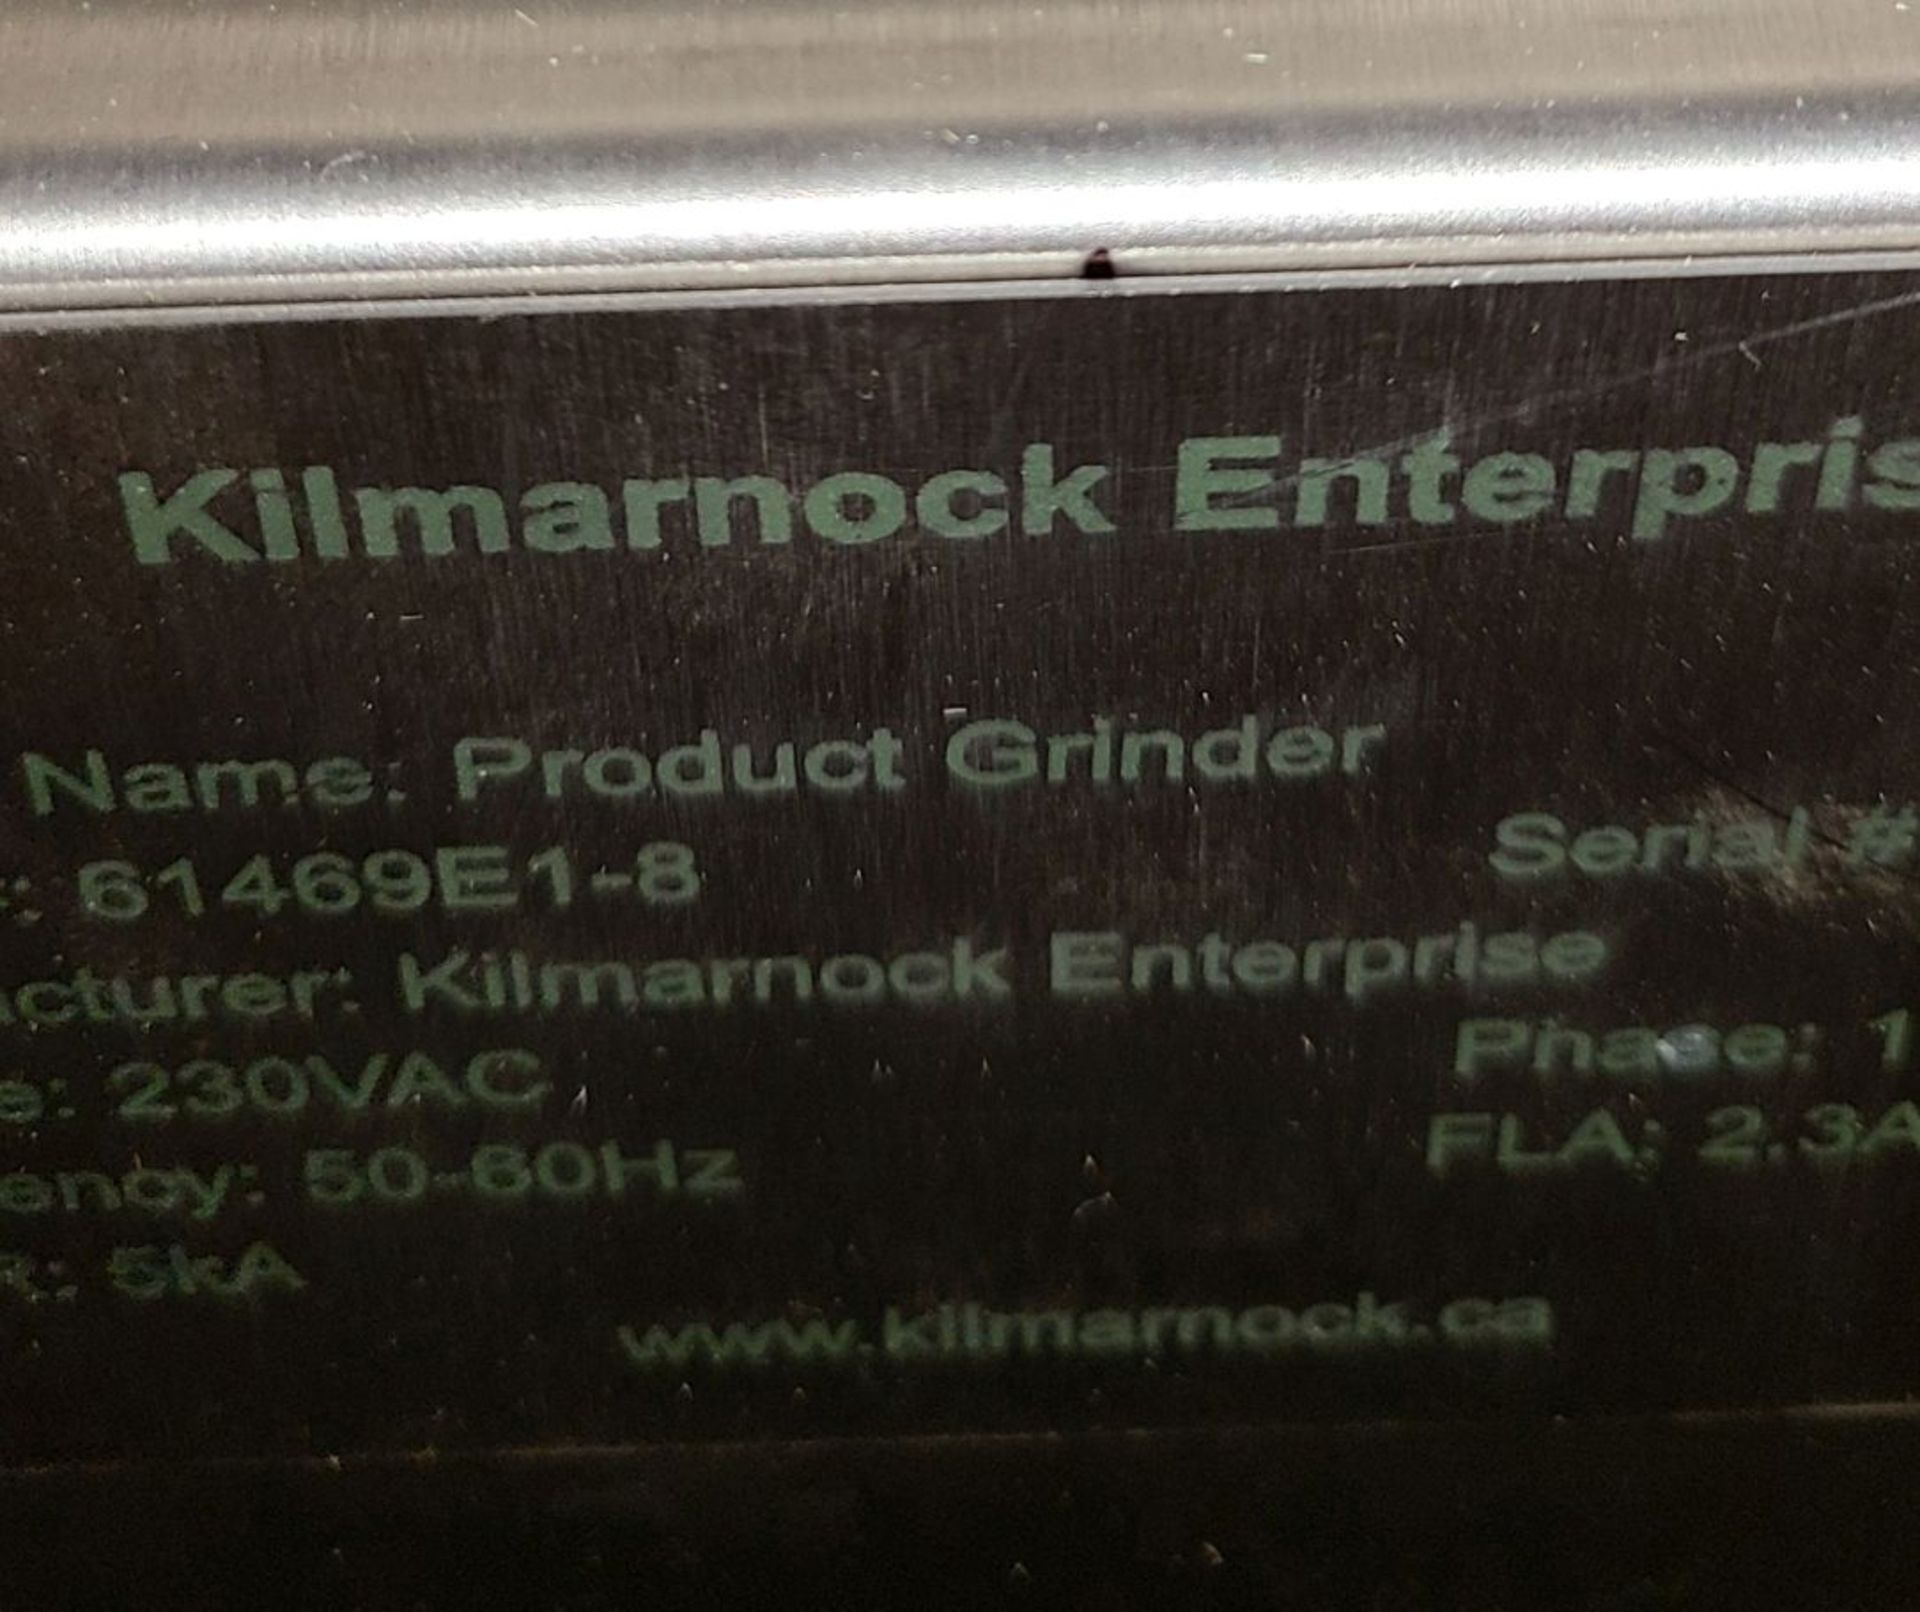 Lot of (3) Used Kilmarnock Tweed Grinder.Model Product Grinder. - Image 6 of 7